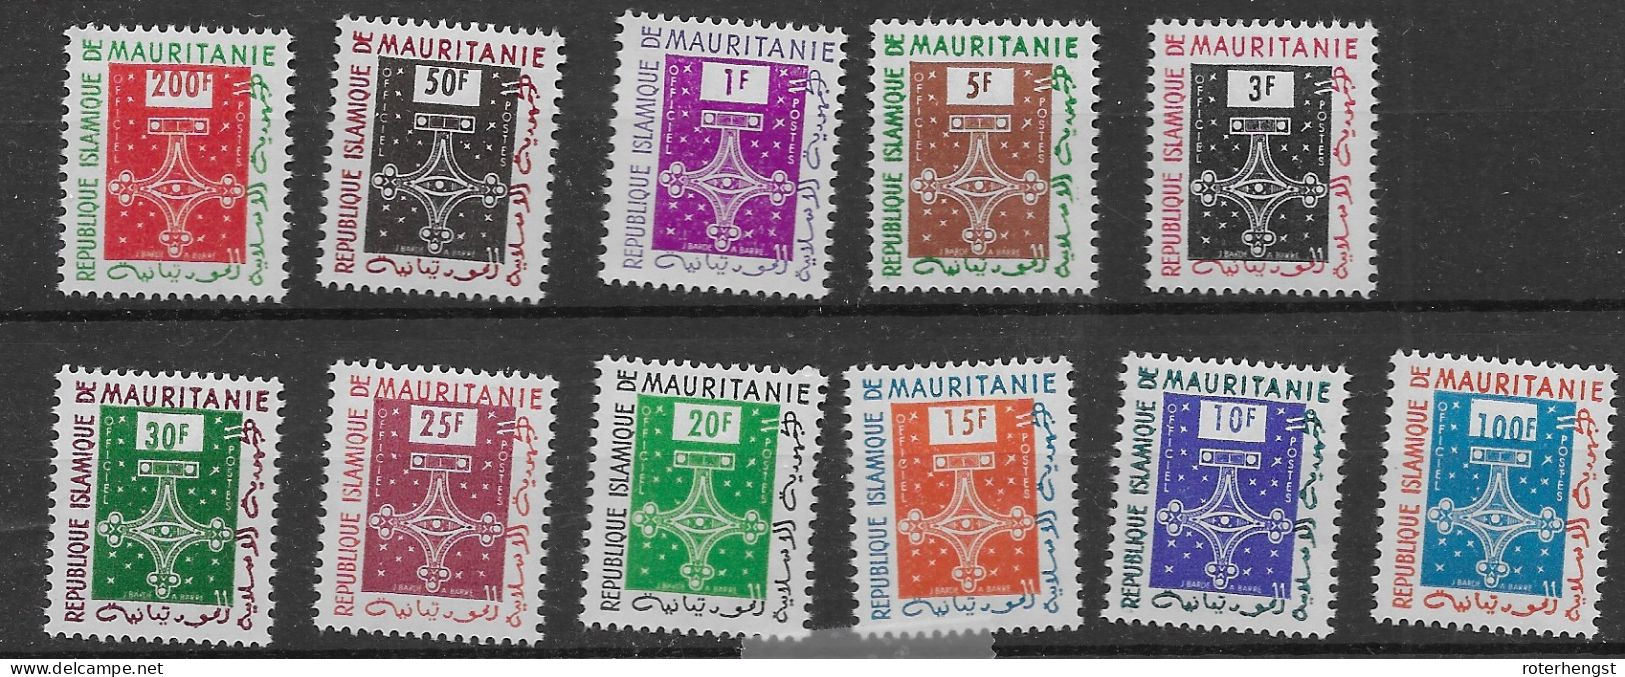 Mauritania Mnh ** 1961 11 Euros Postage Due Set Complete - Mauritanie (1960-...)